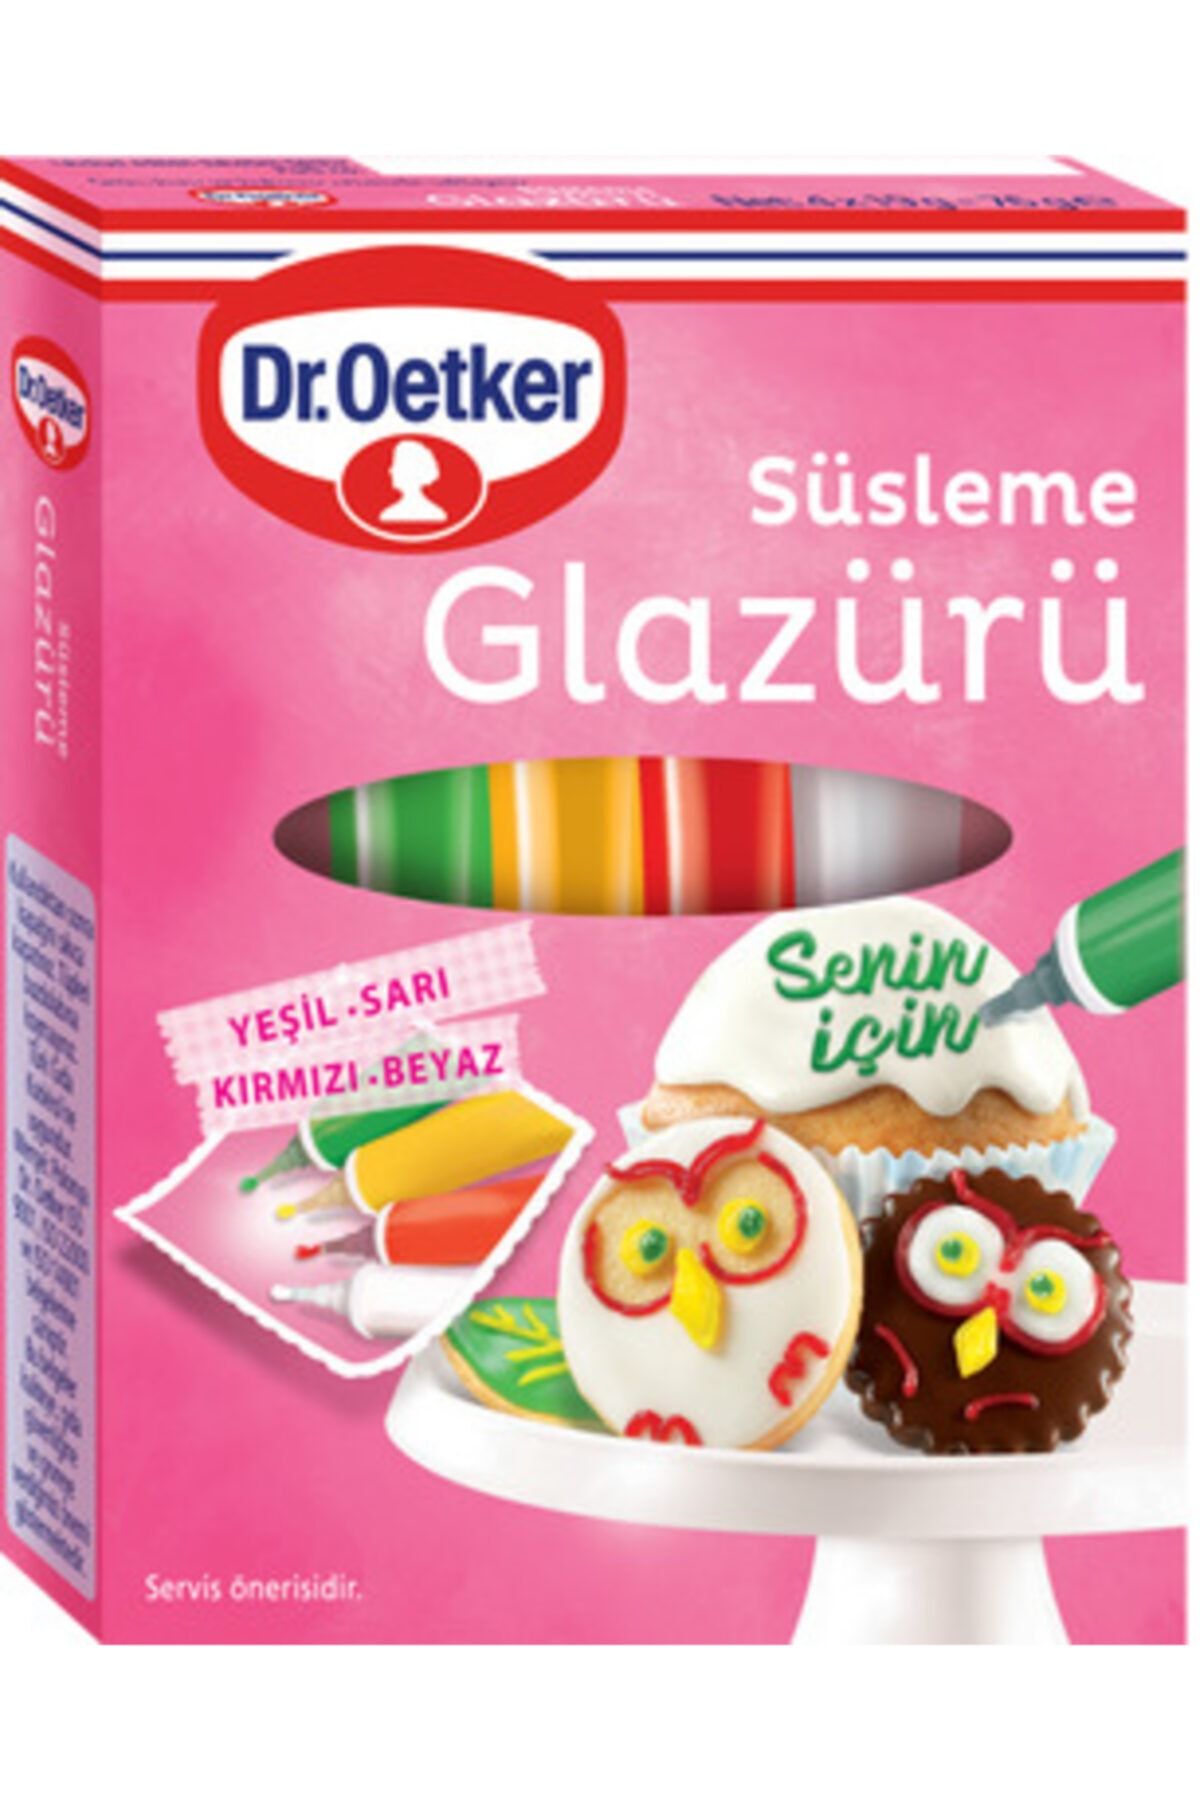 Dr. Oetker Droetker Süsleme Glazürü 4 Renk